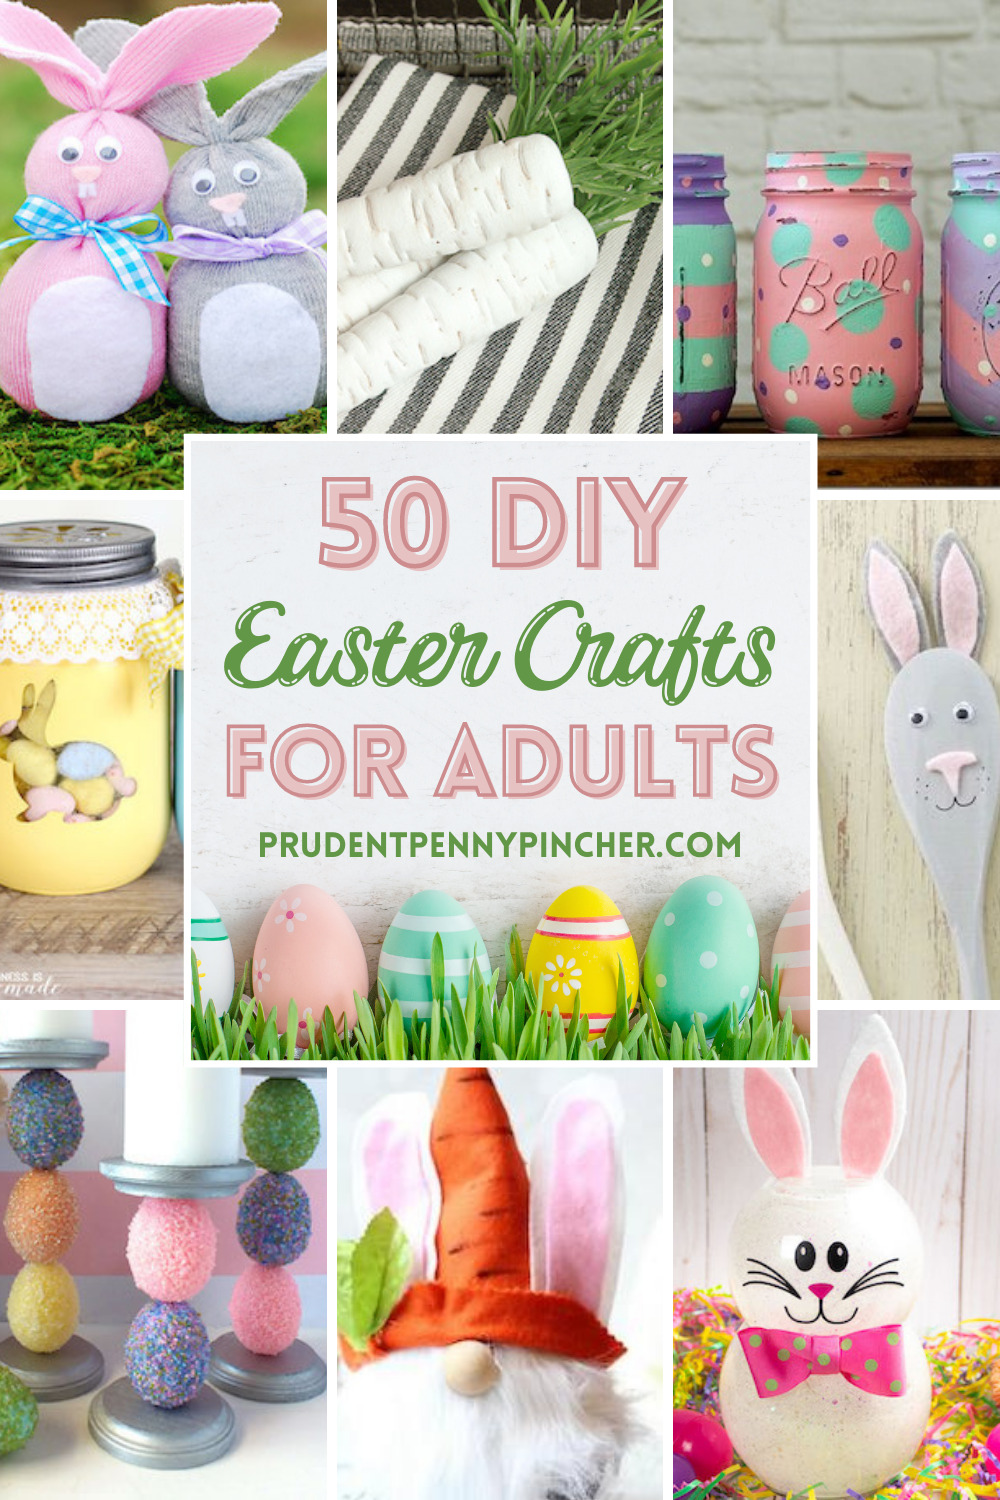 DIY Decorative Easter Candy Jars - Life. Family. Joy